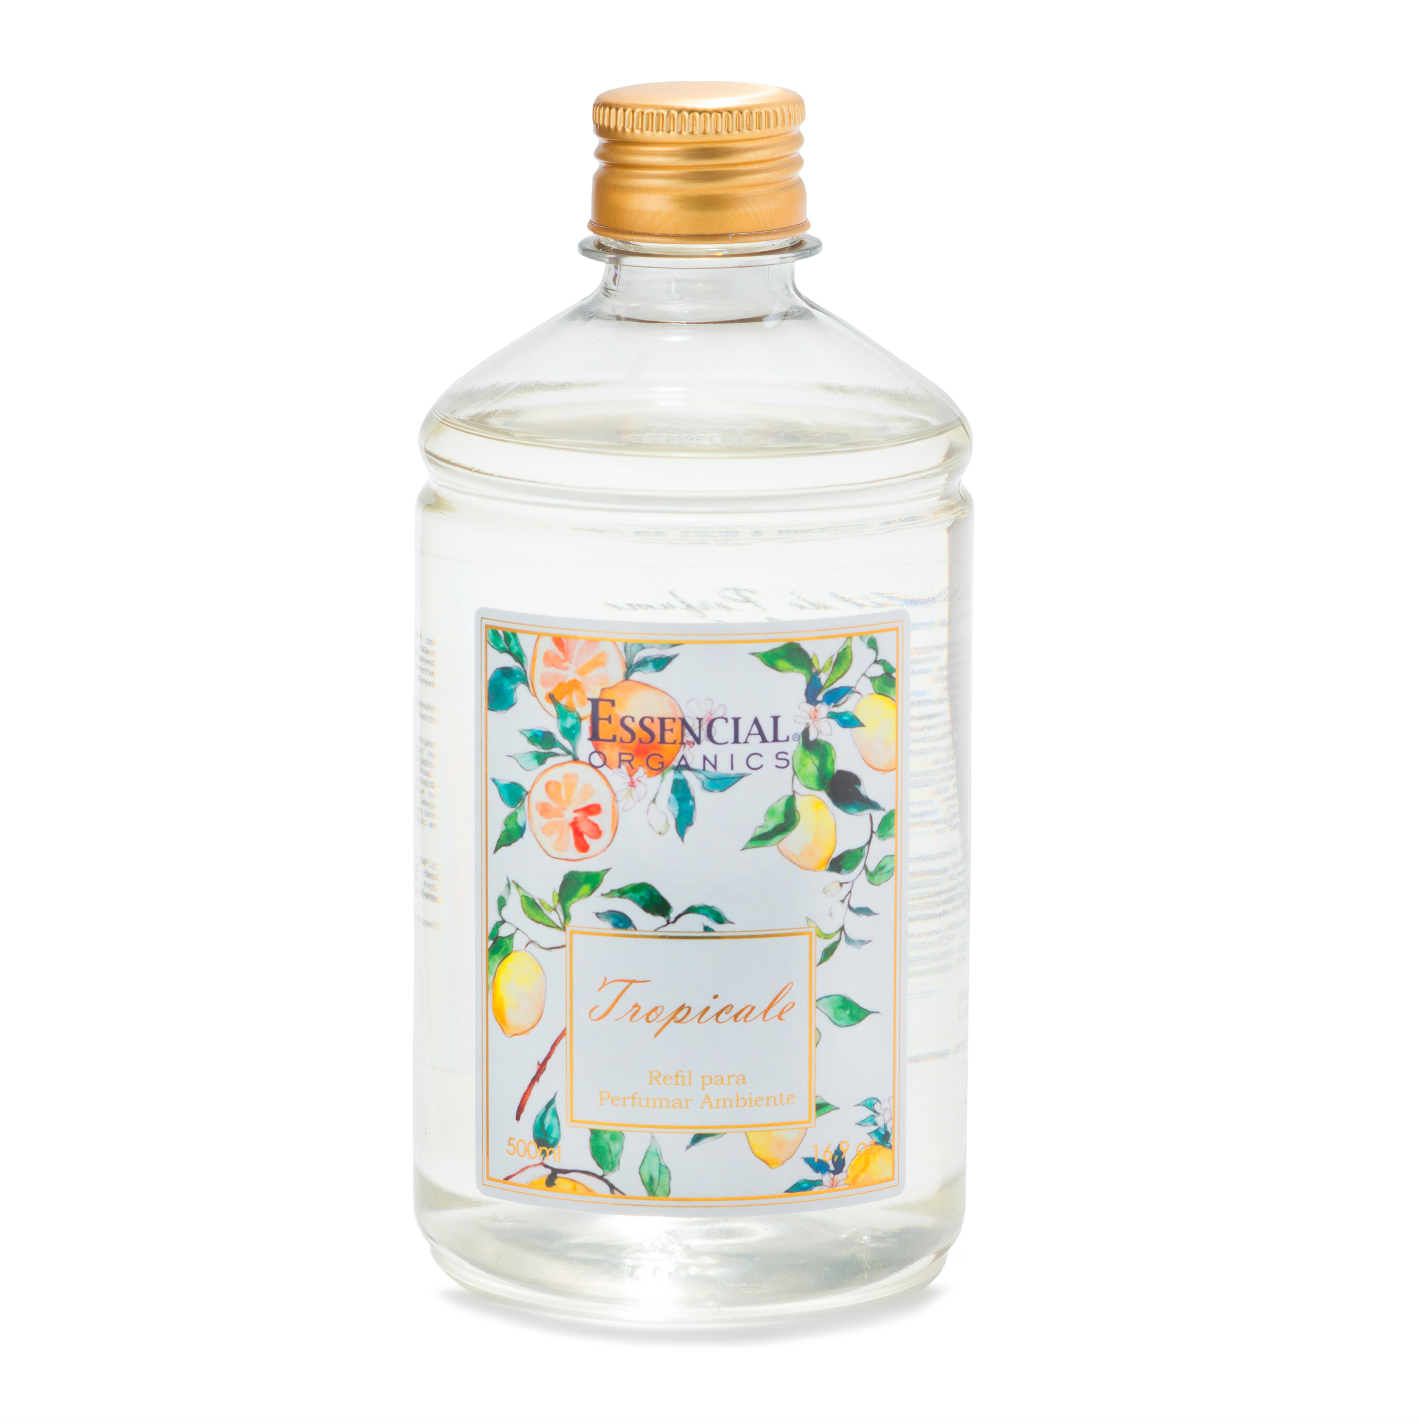 Refil de Perfume para Ambiente Tropicale 500ml - Essencial Organics